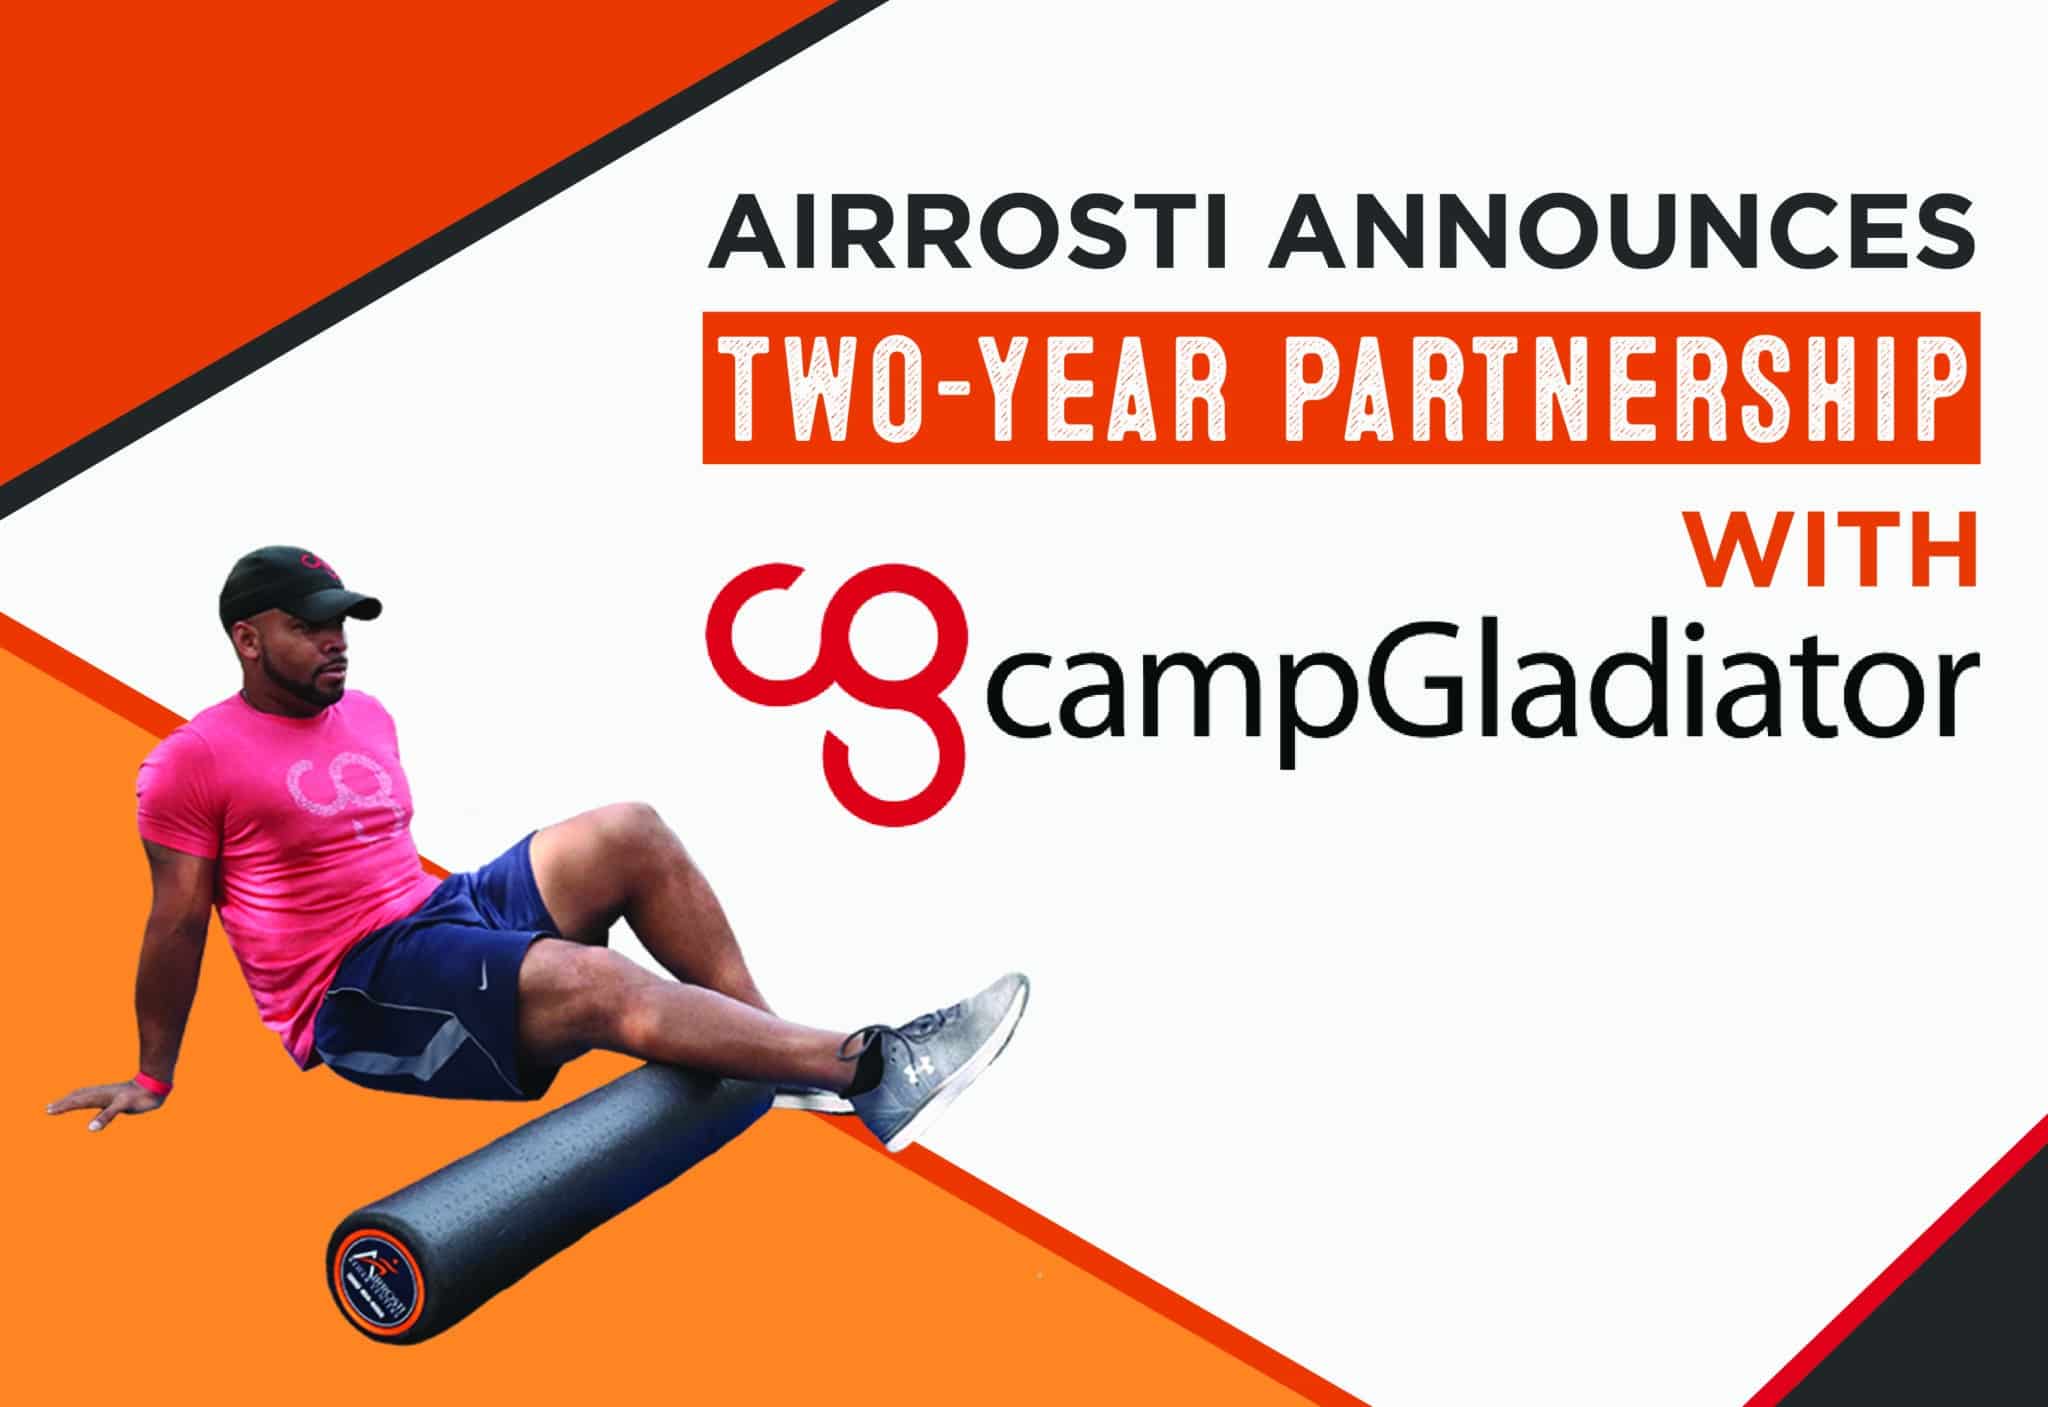 Airrosti Camp Gladiator Partnership